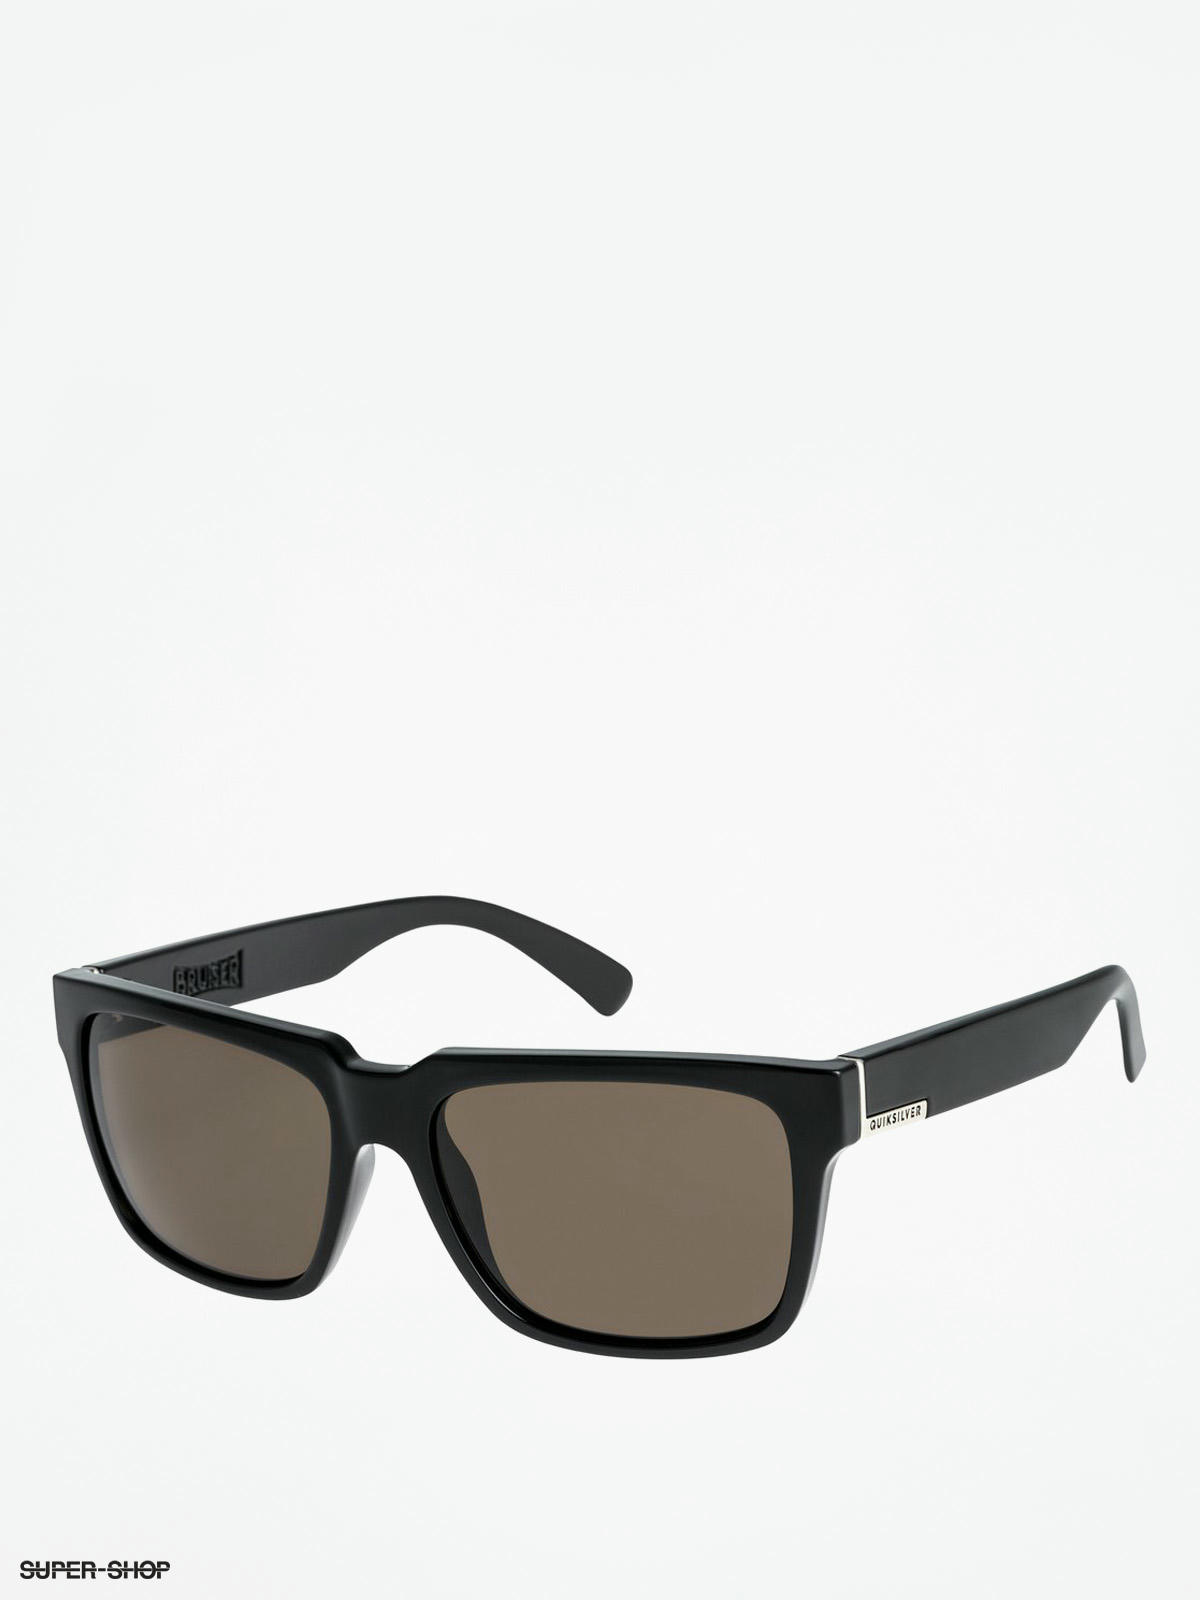 Quiksilver Sunglasses Bruiser (shiny black/grey)